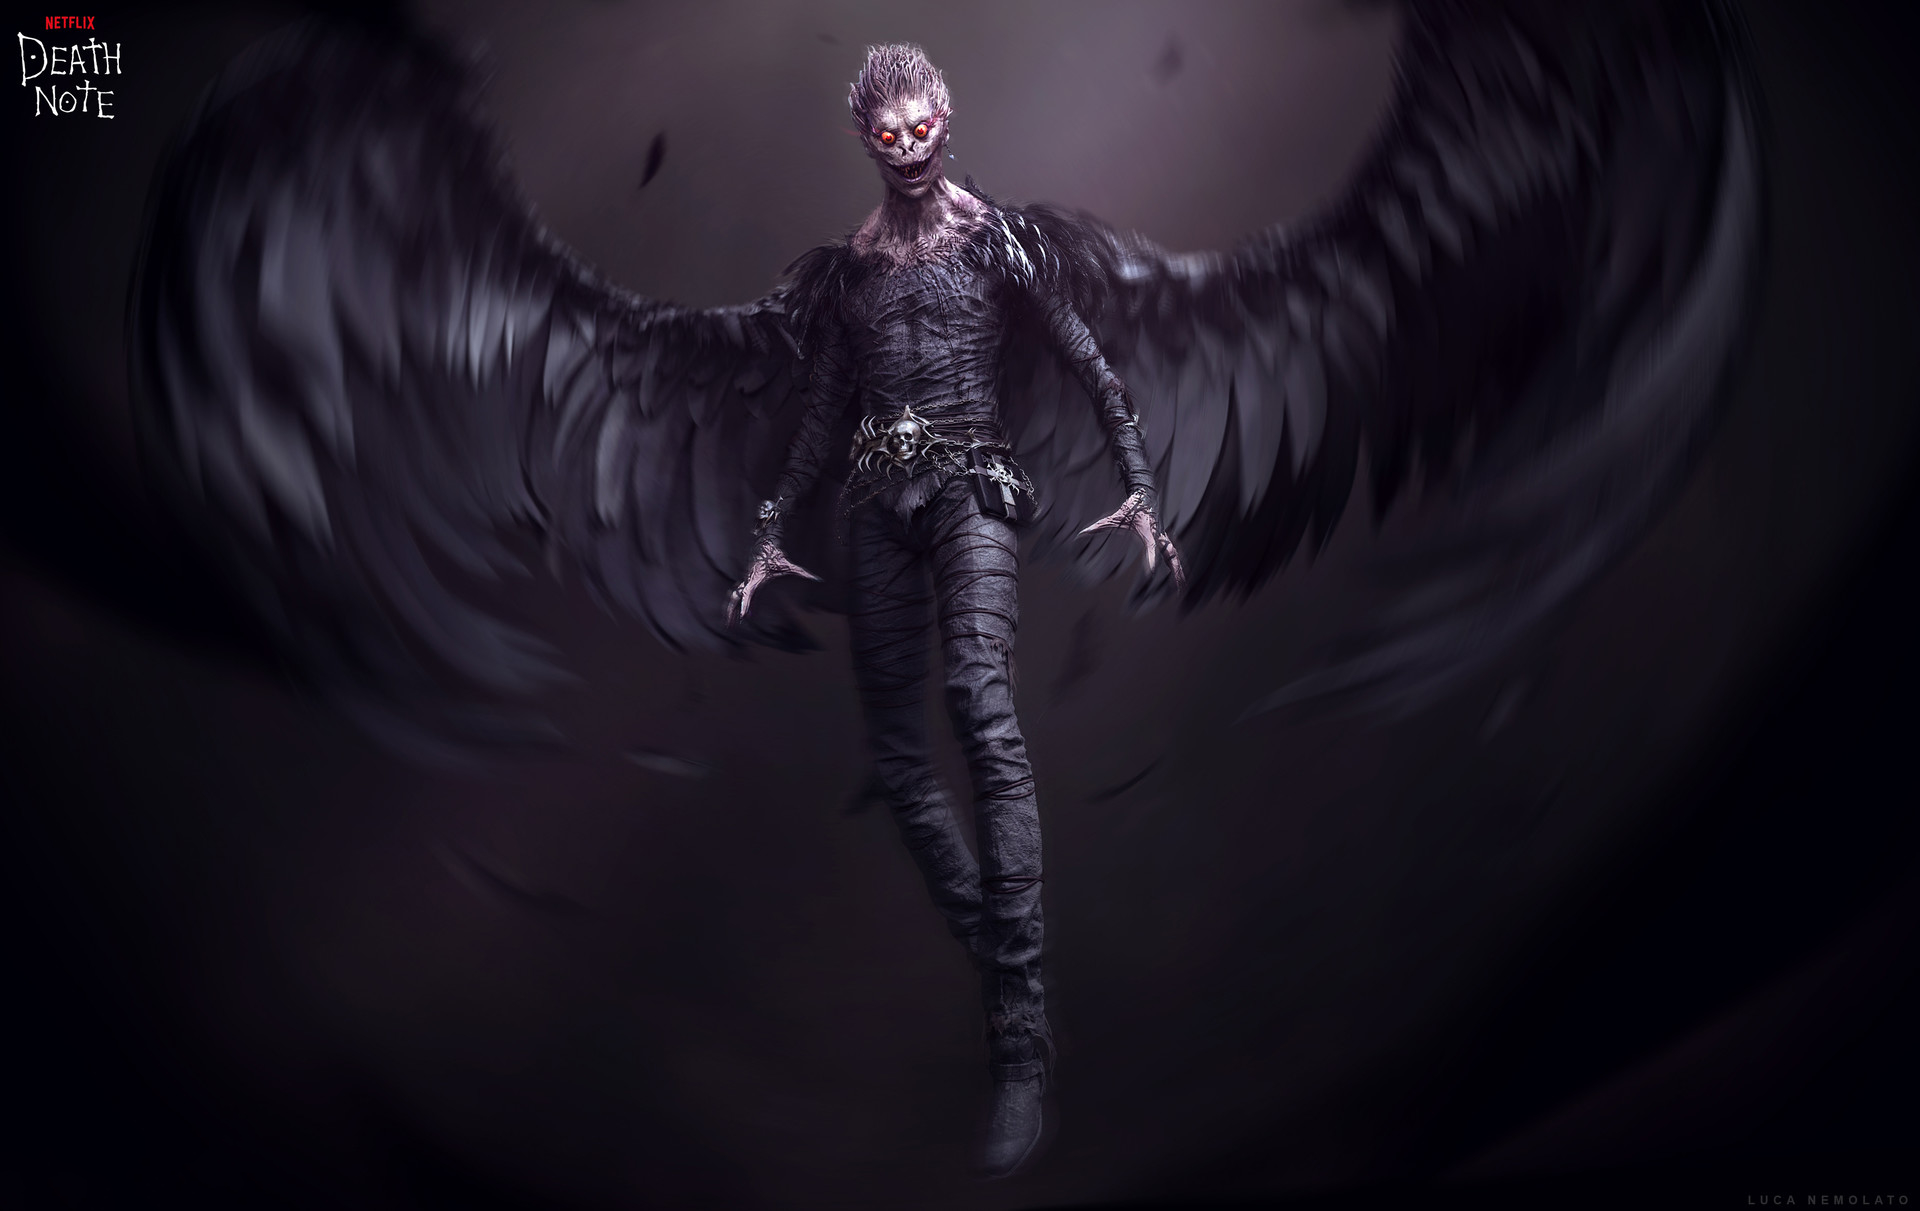 Black Angel by Luca Nemolato